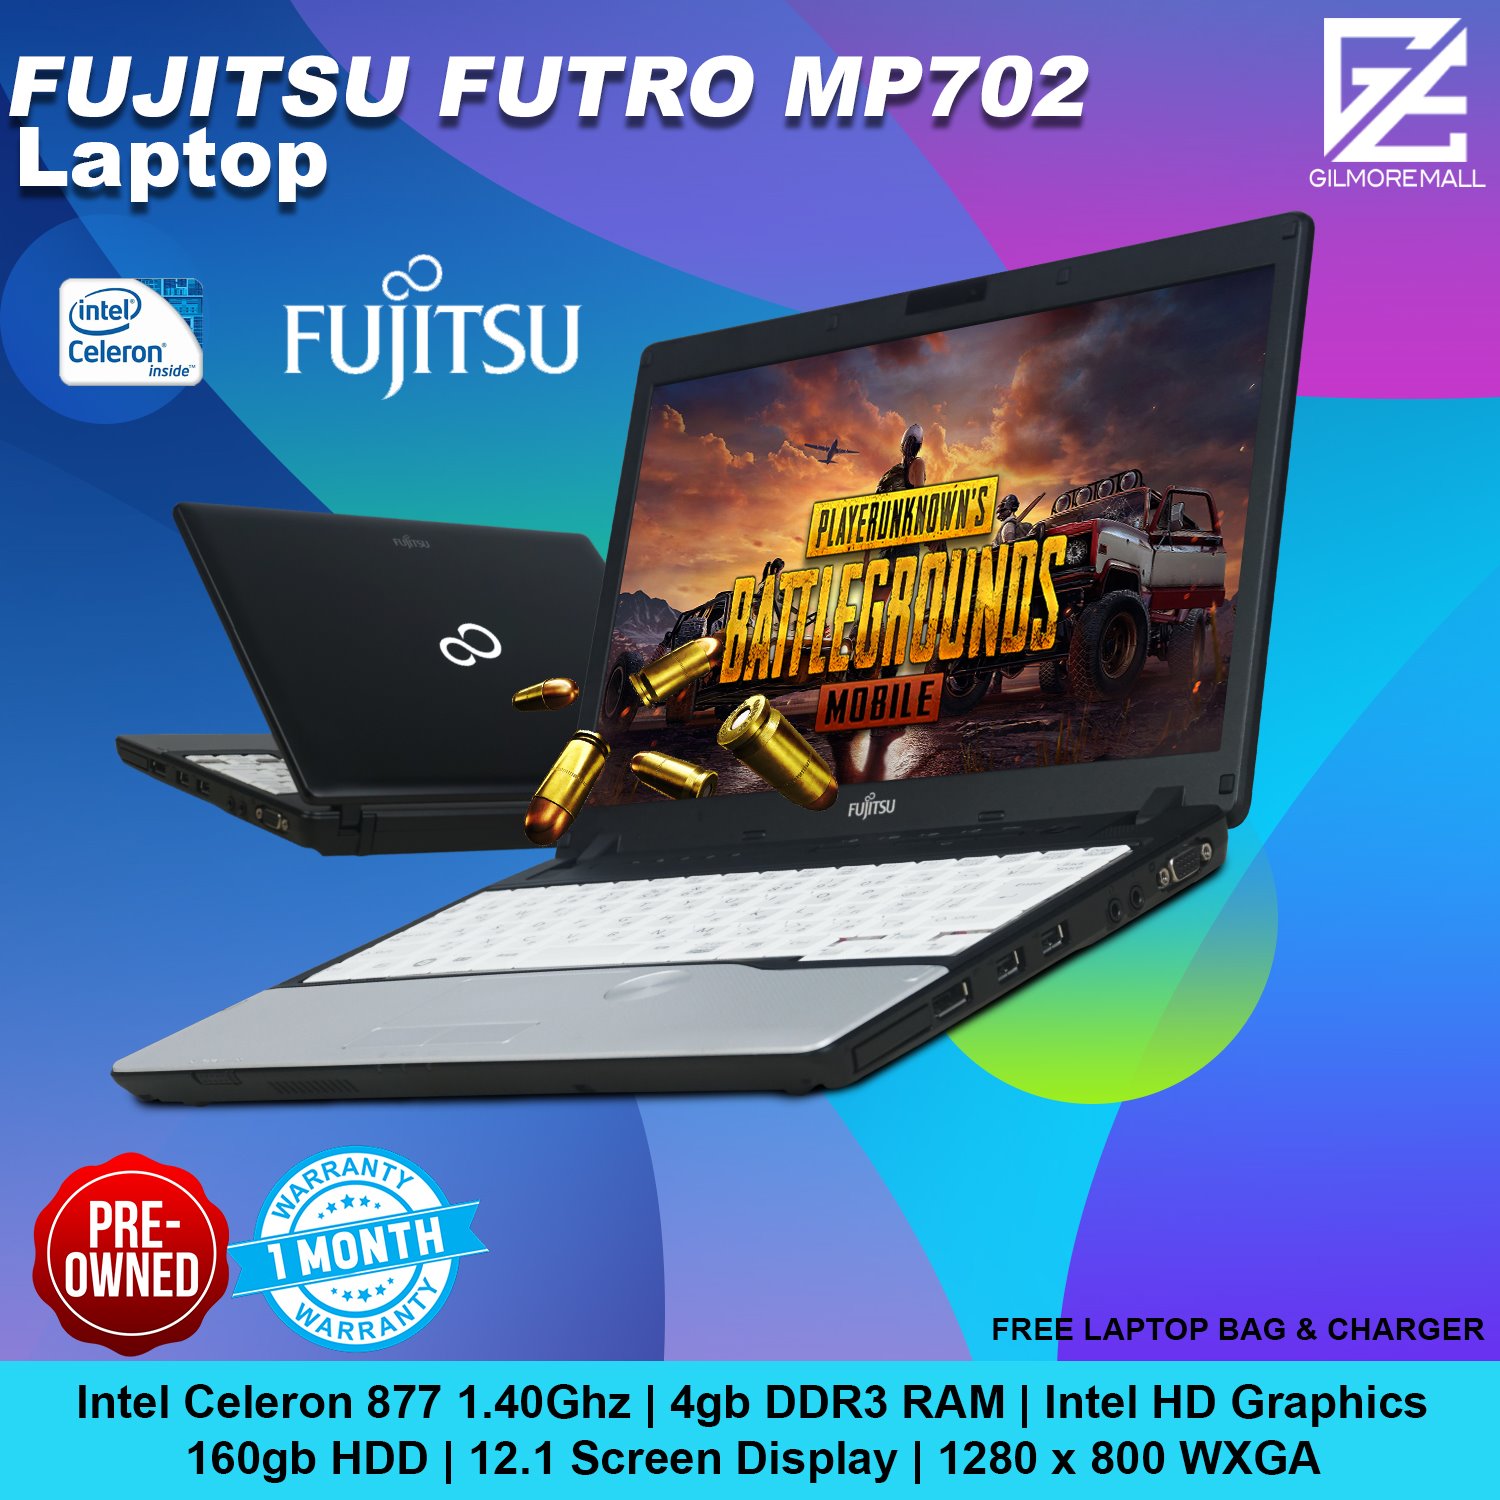 Fujitsu Futro MP702 Laptop | Intel Celeron Dual Core 4GB RAM DDR3 160GB